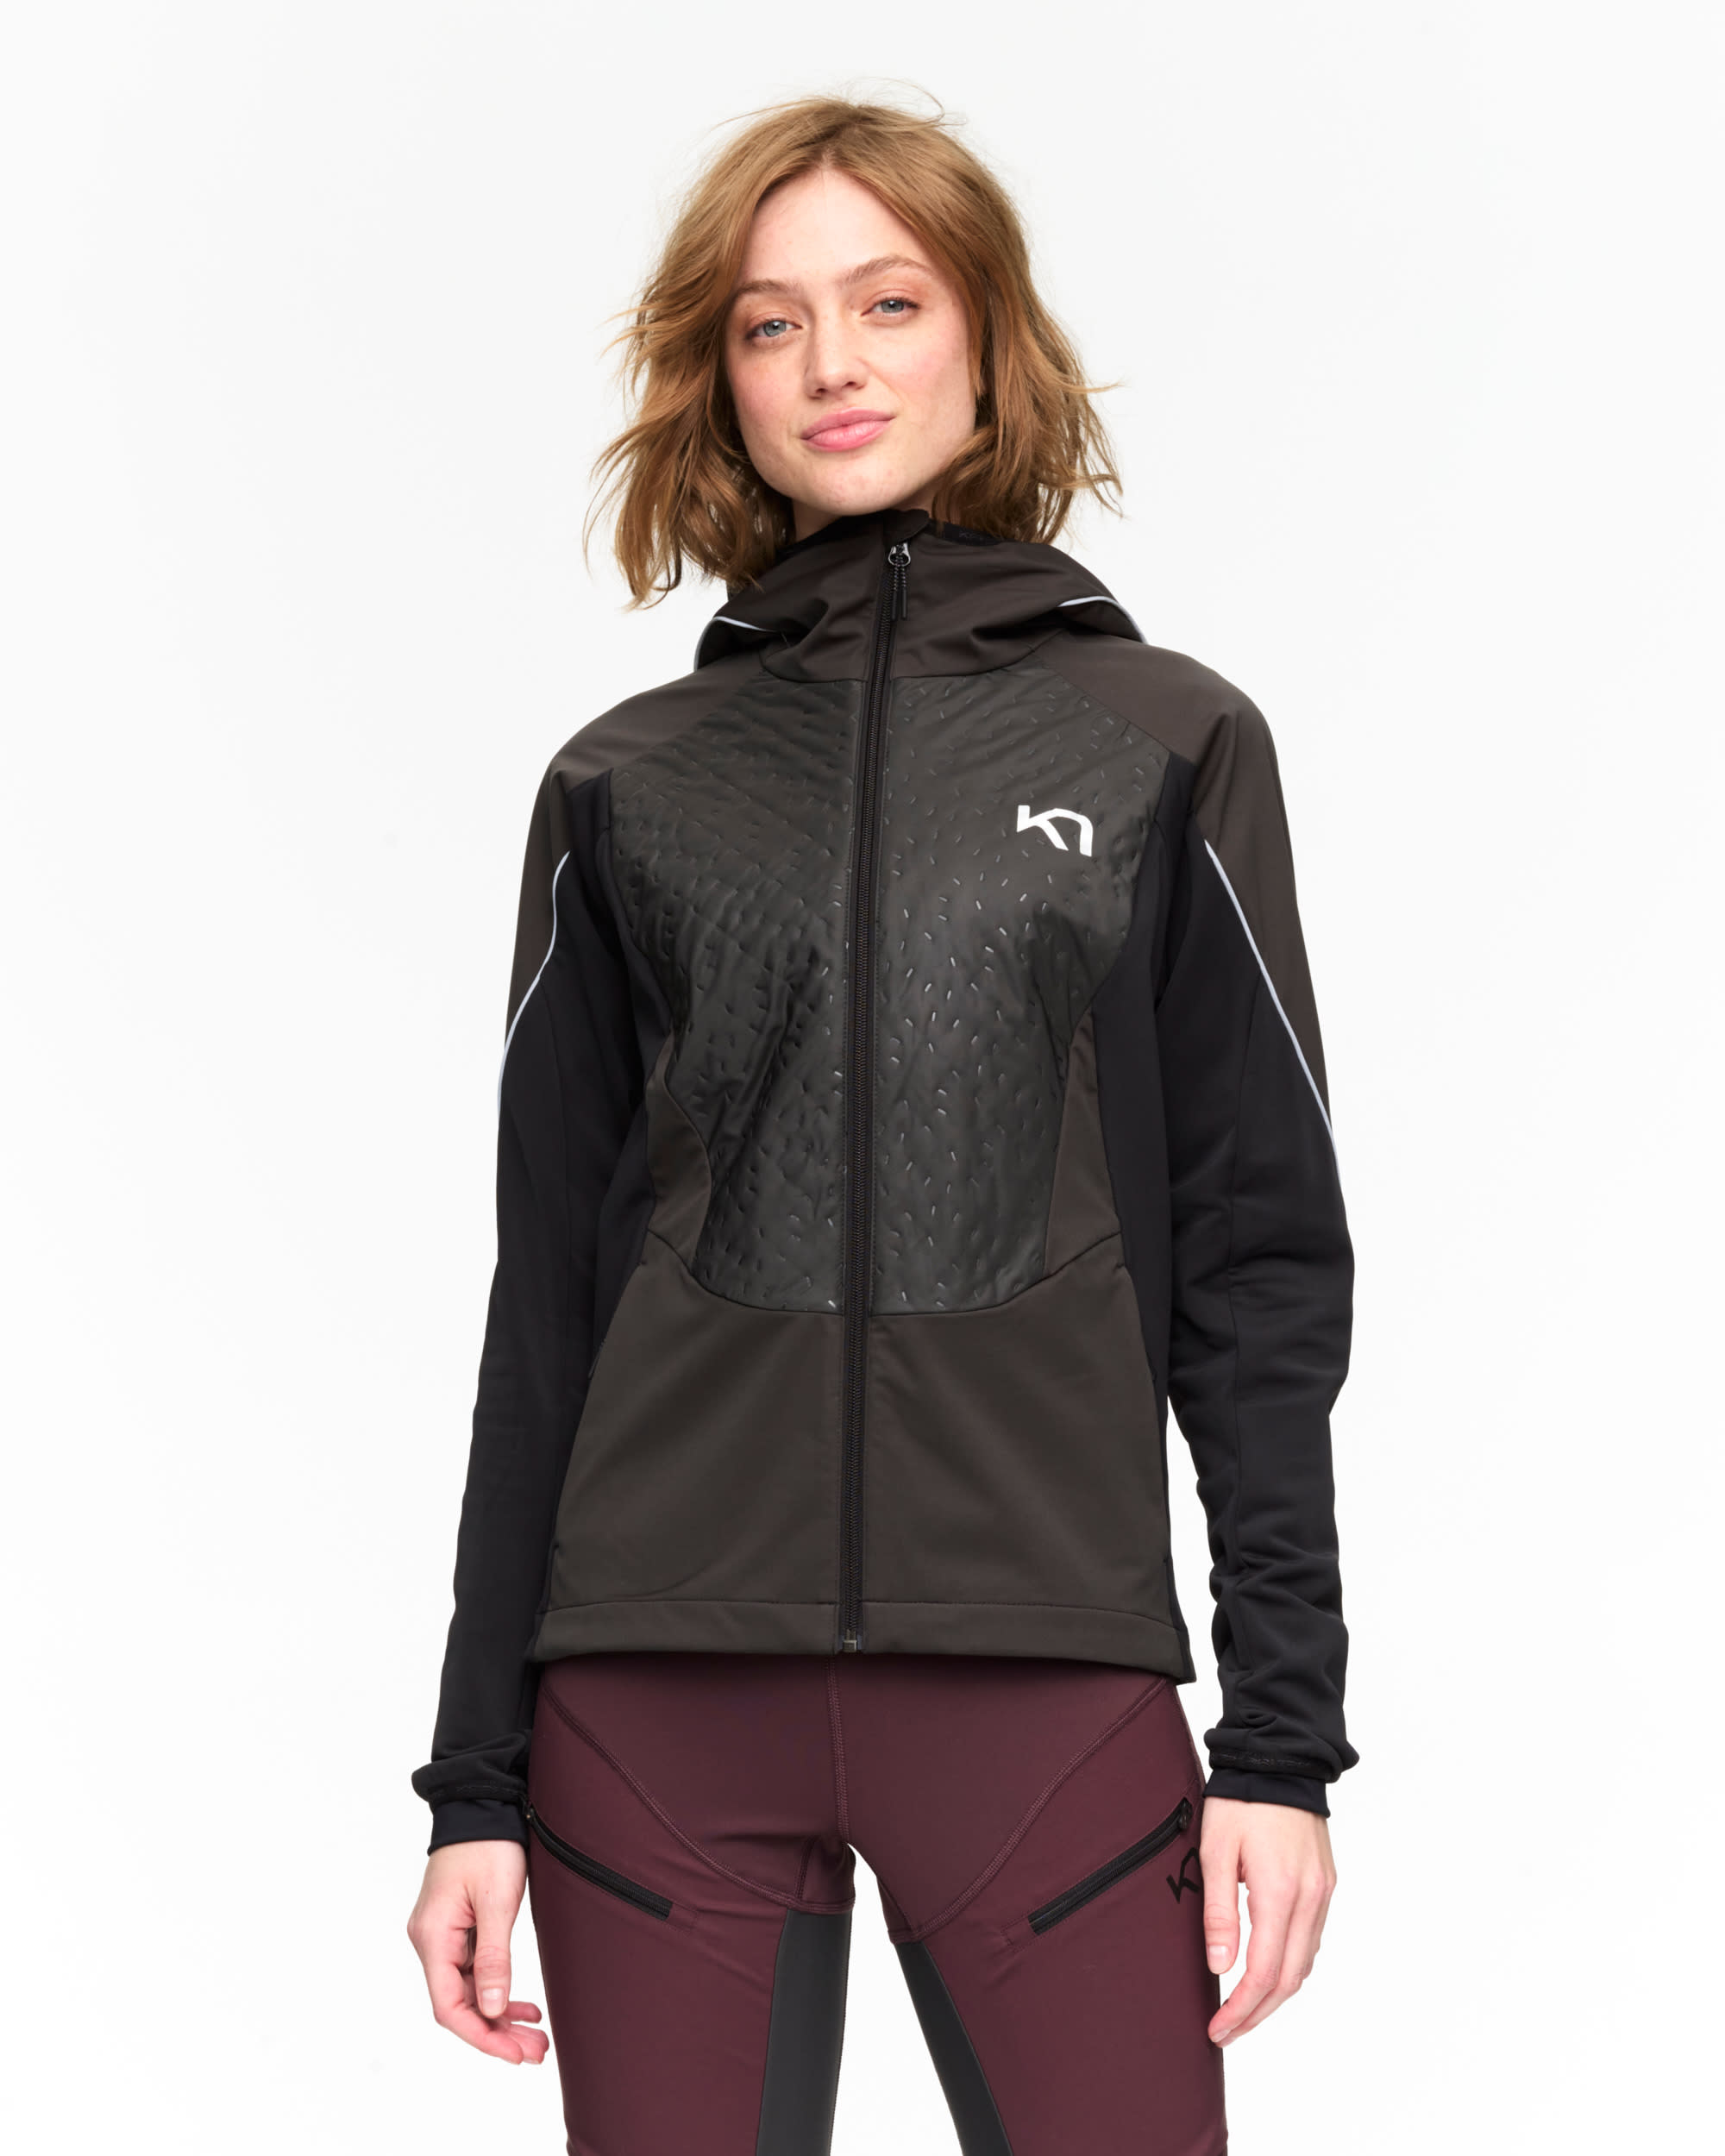 Kari Traa Tirill 2.0 Jacket - Synthetic jacket Women's, Free EU Delivery